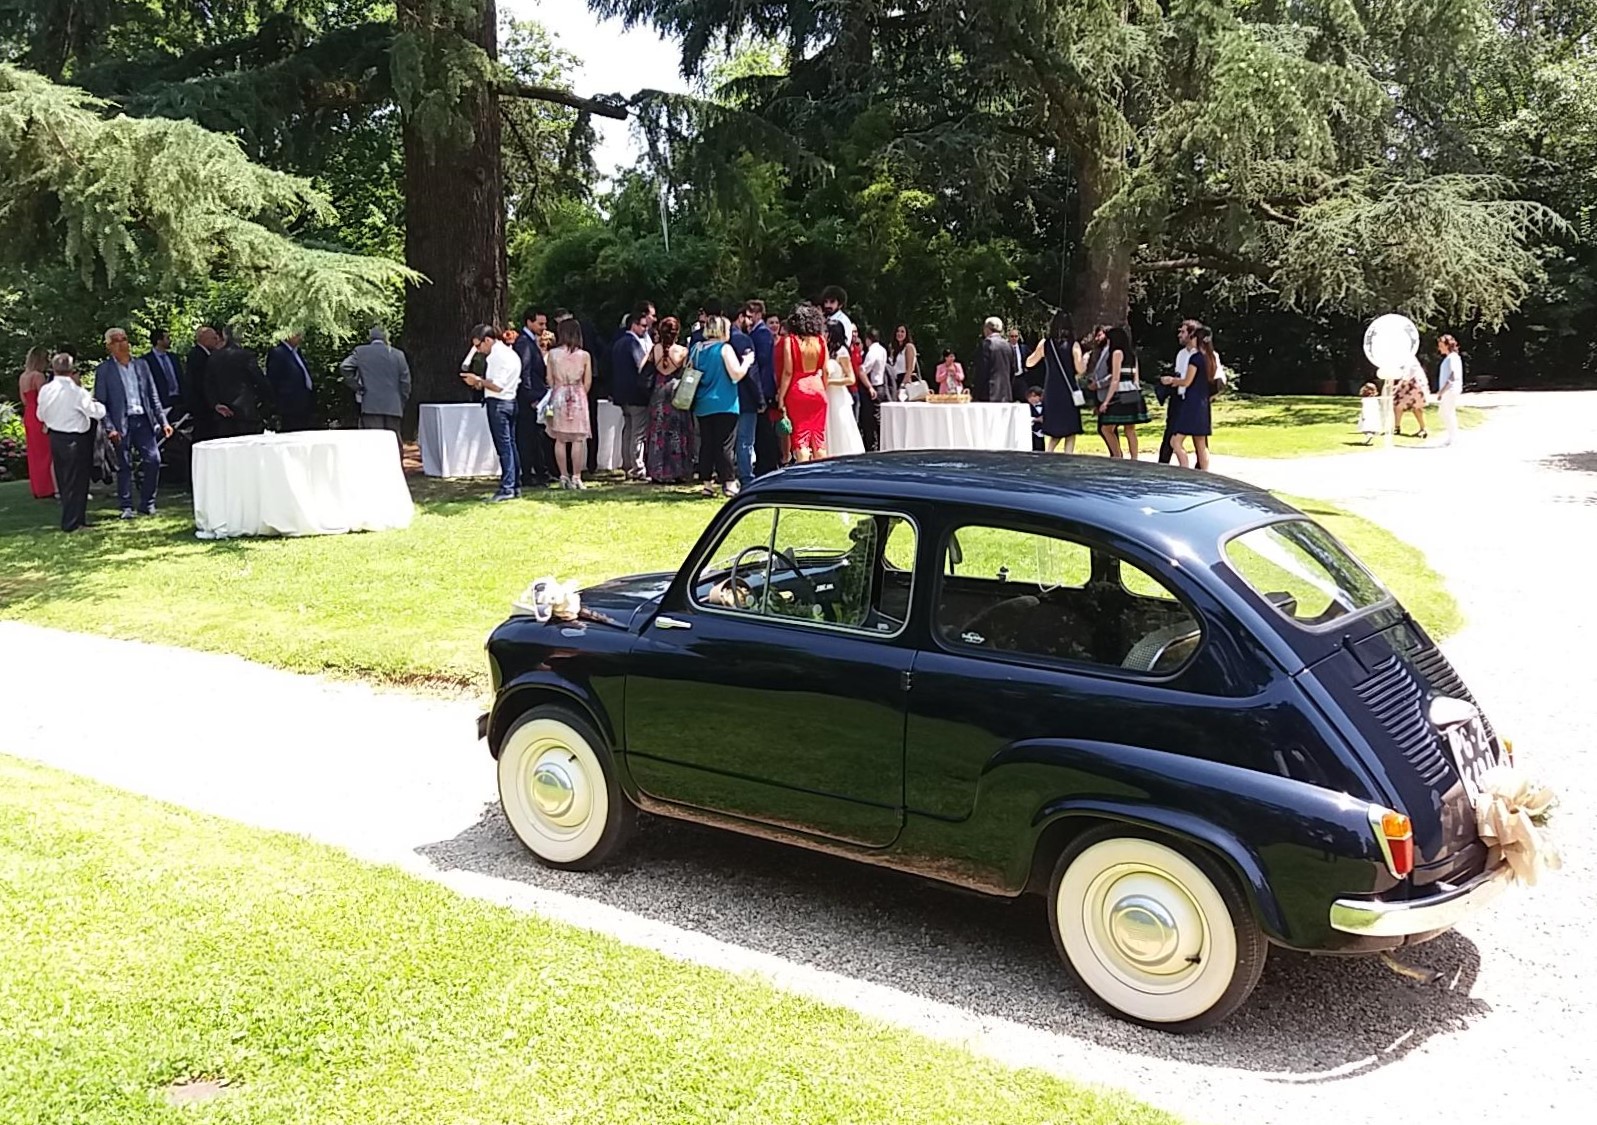 C-Piemonte-Torino-Fiat-600_Maggiolone_Volkswagen_VW_Fiat-124-Spider-America_matrimonio_cerimonia_evento_auto-depoca_classic-car_wedding_events_ceremony.jpg